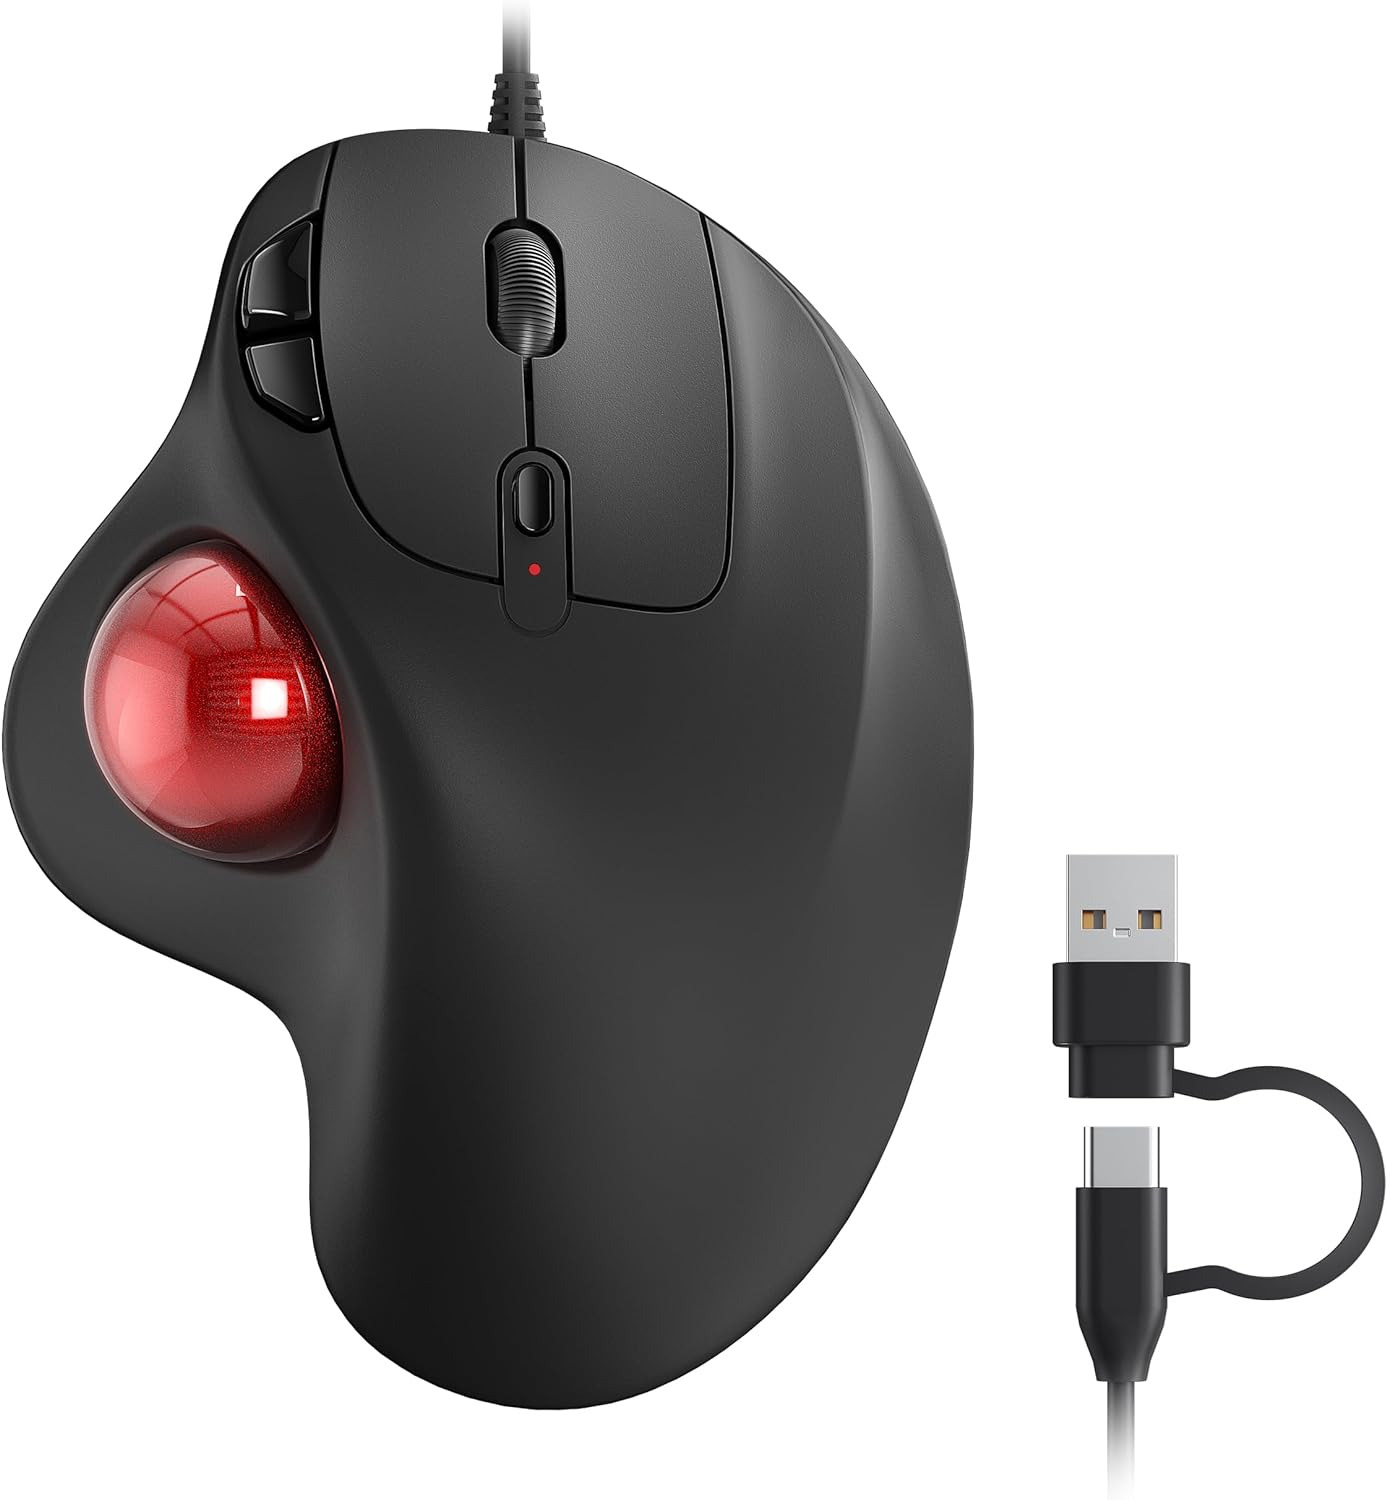 M509 Trackball Mouse Wired Ergonomic Design Easy Thumb Control Precise & Smoo...